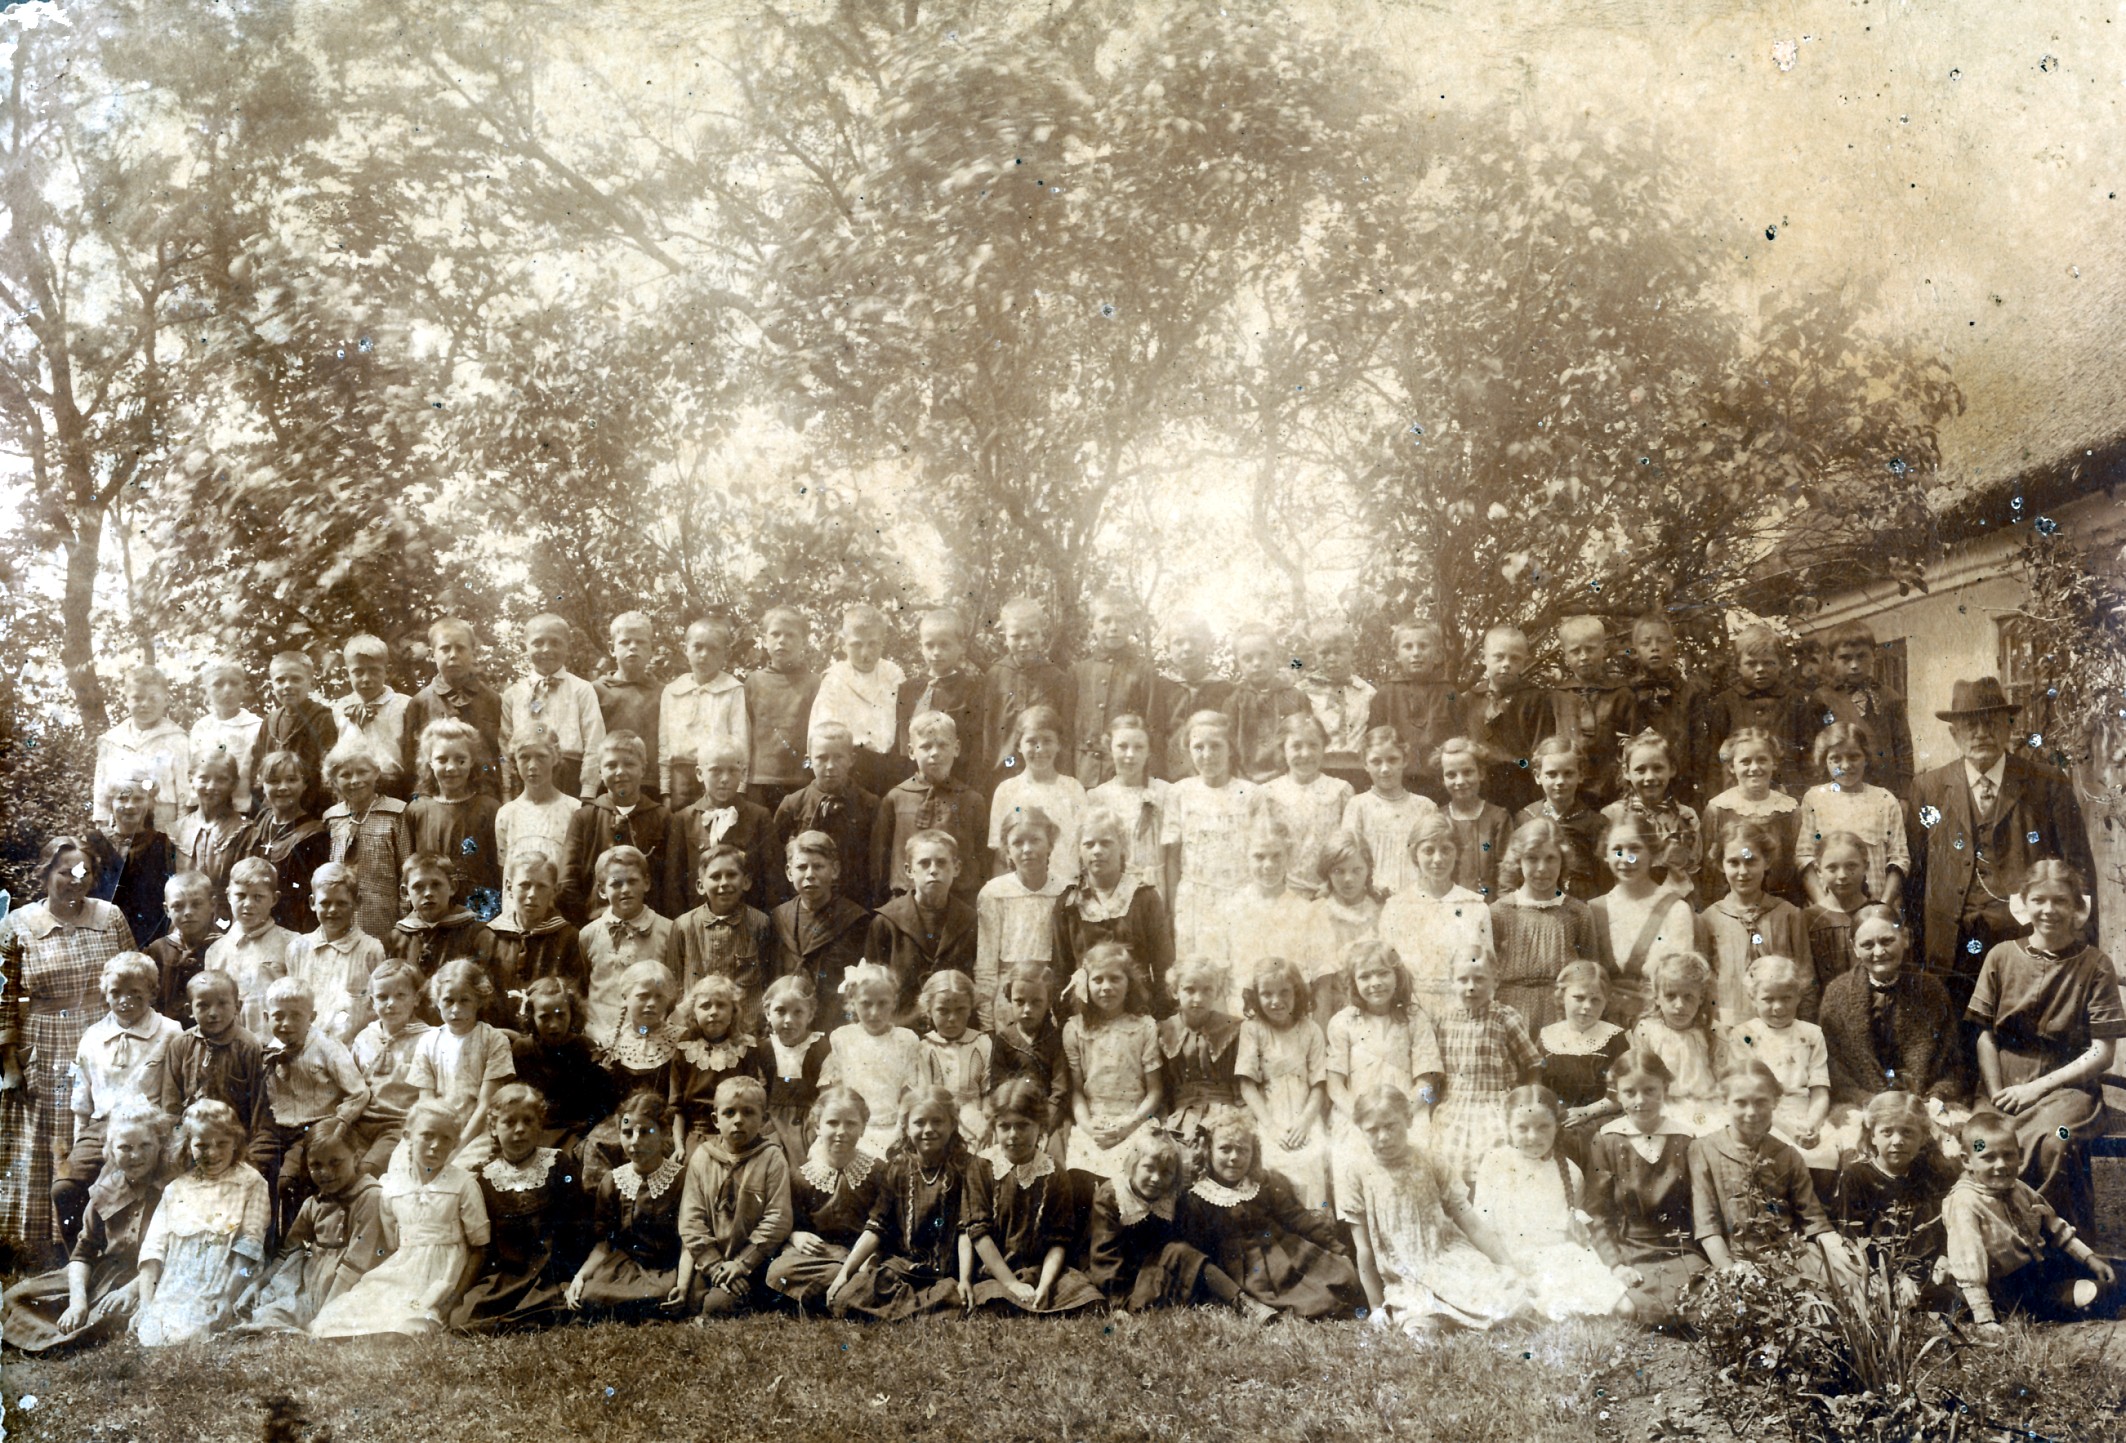 Nr. Asmindrup Skole - sommeren 1920 (B8908)